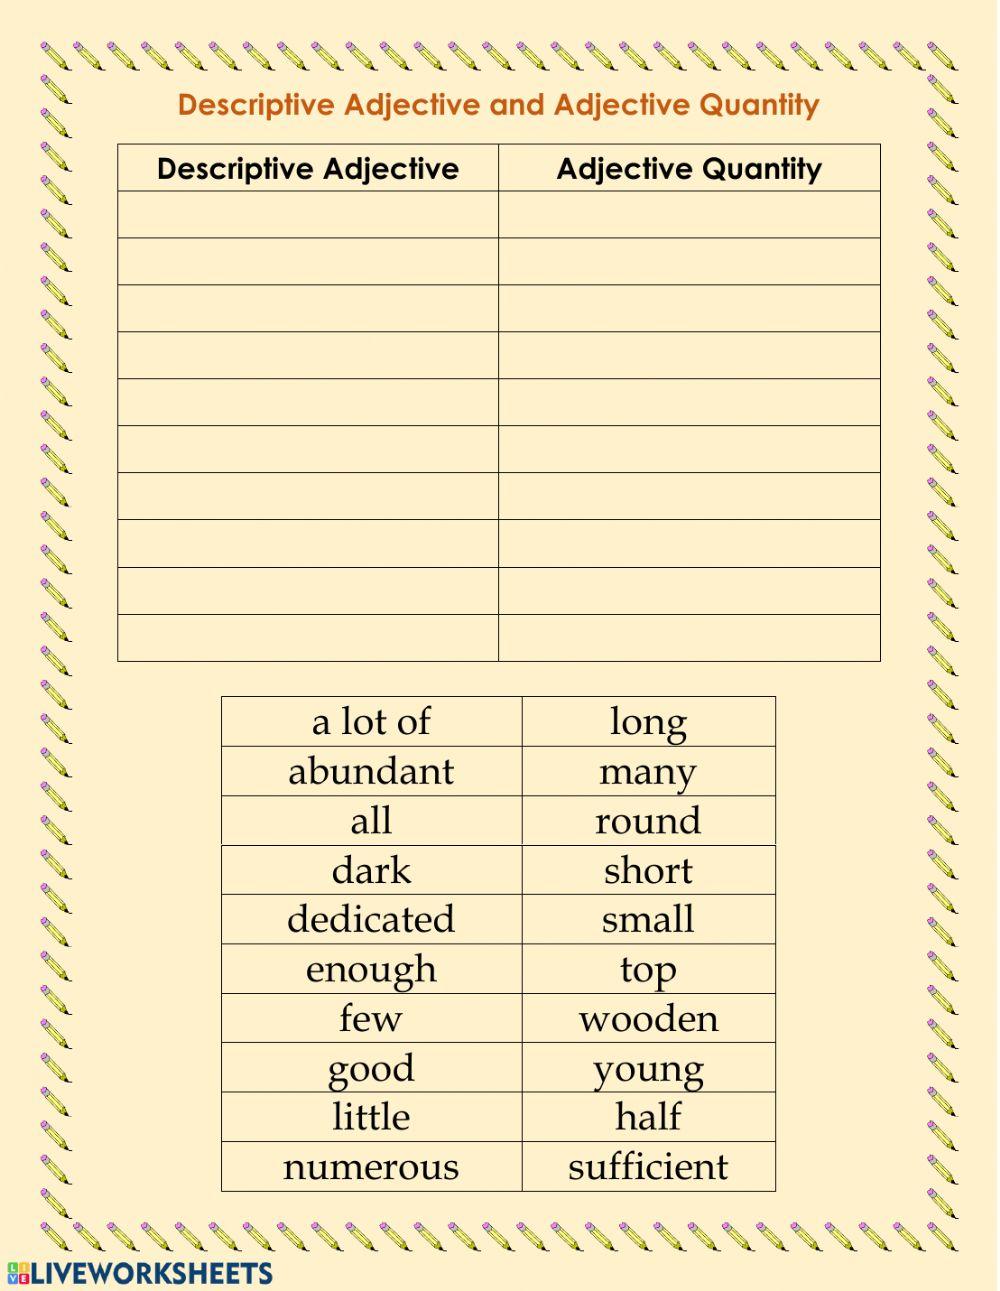 Descriptive adjective and adjective quantity